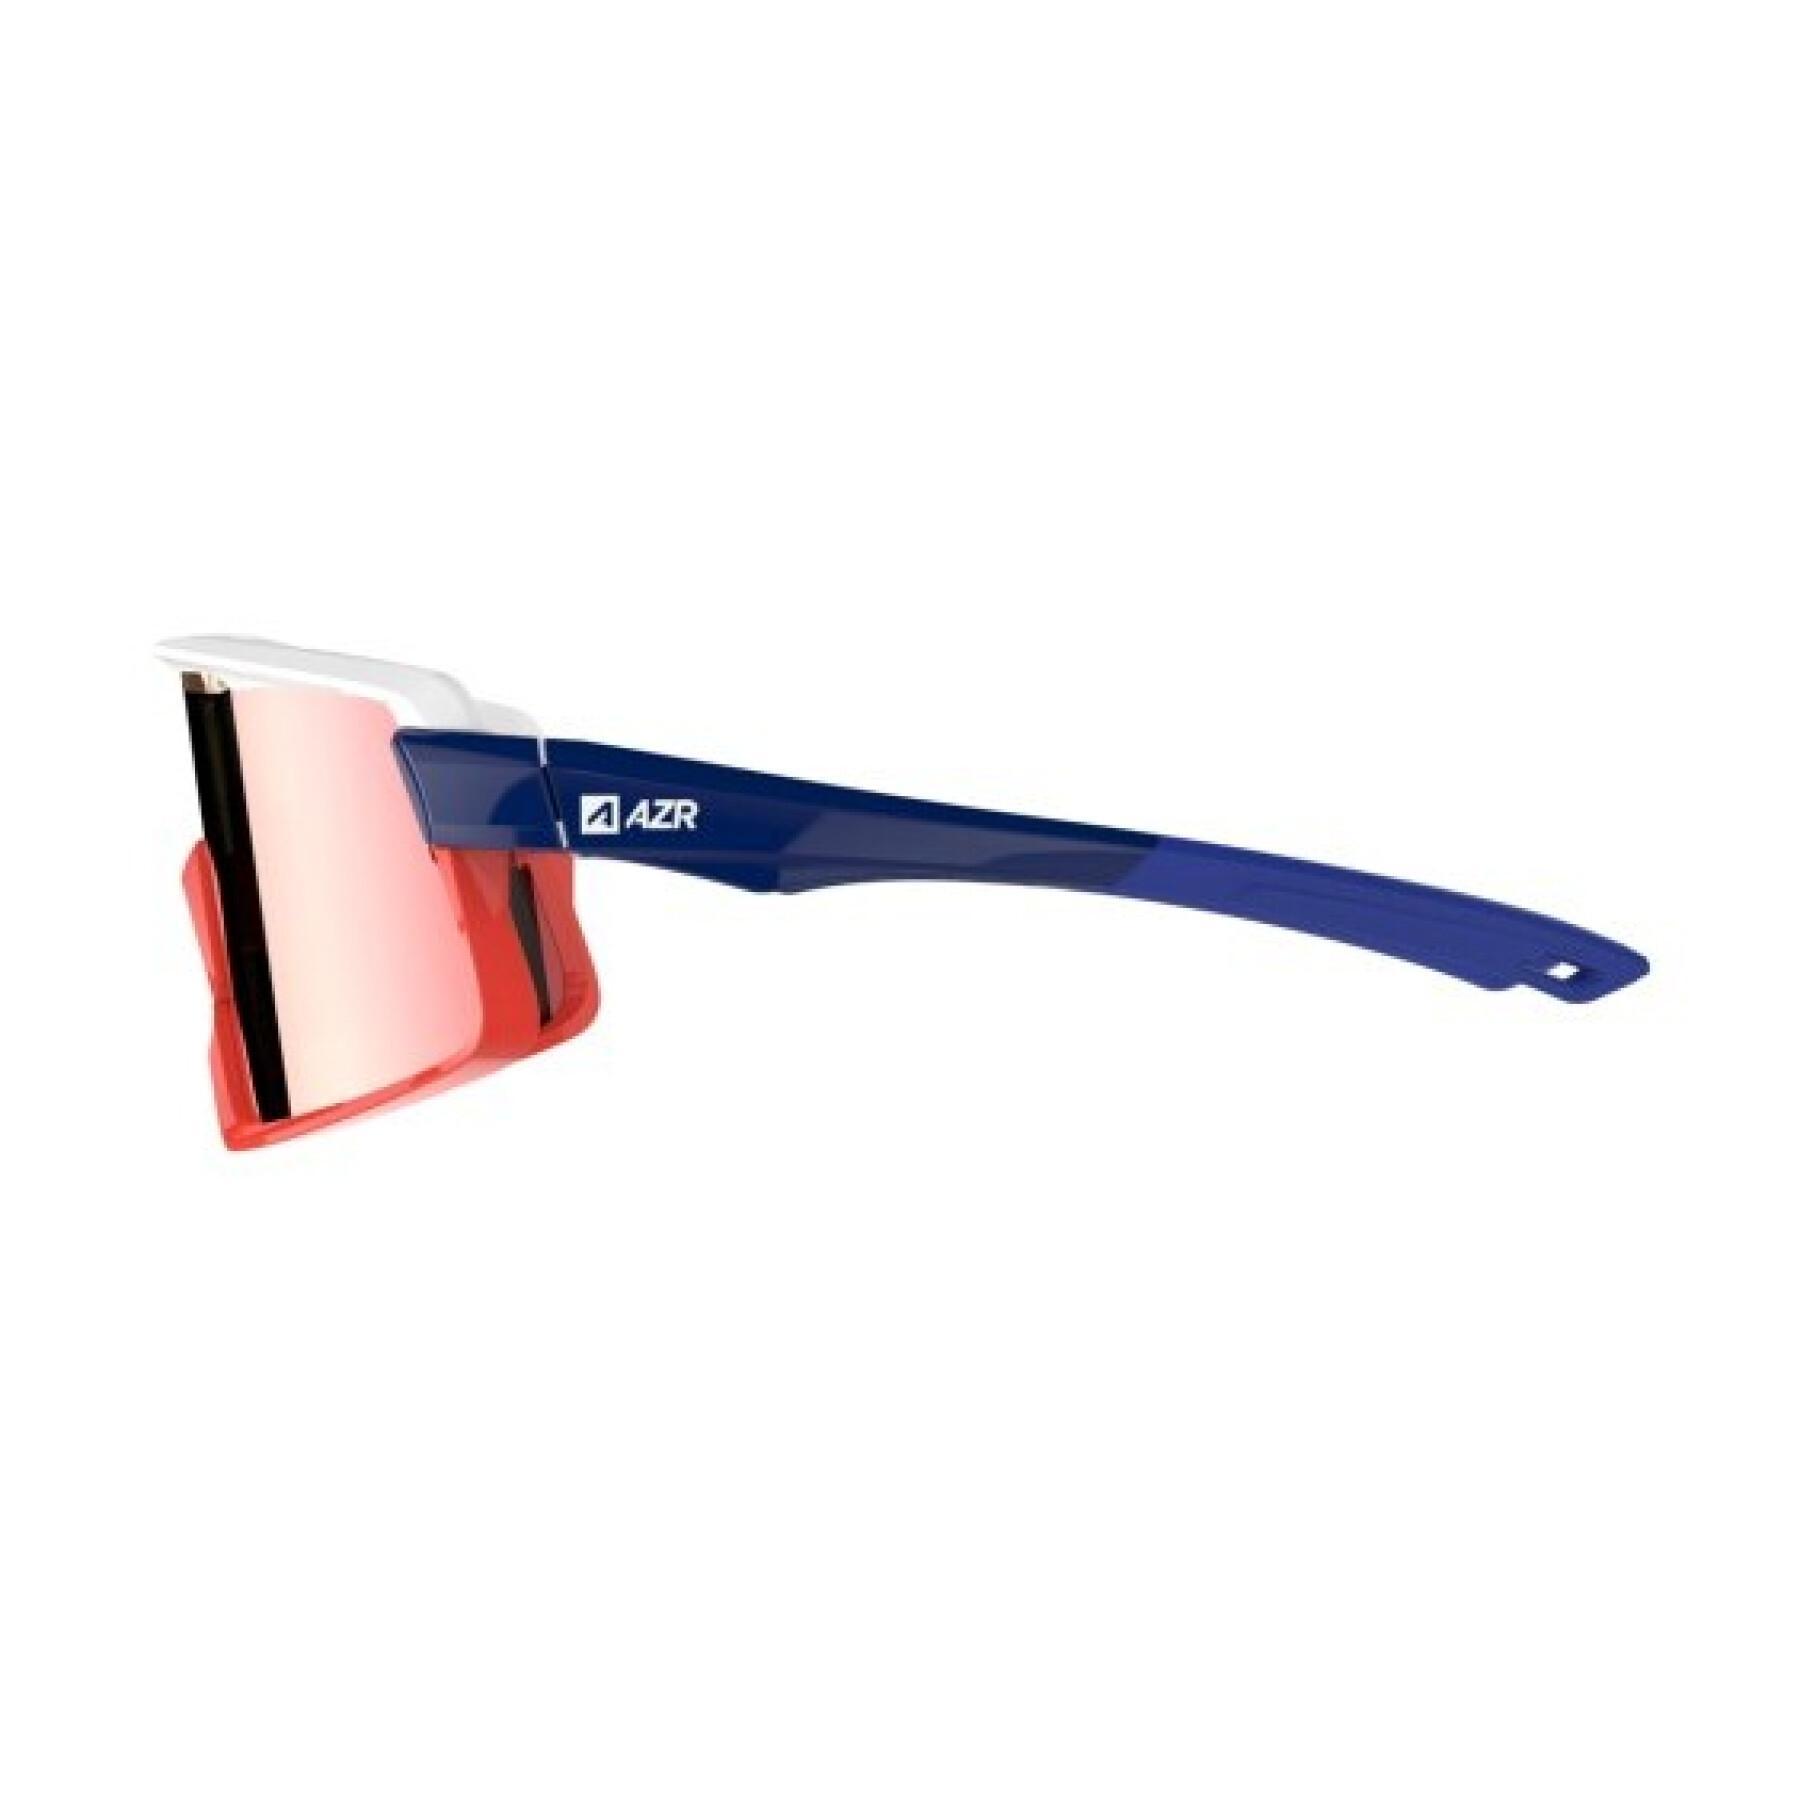 Meerlagige hydrofobe bril AZR Pro Race Rx